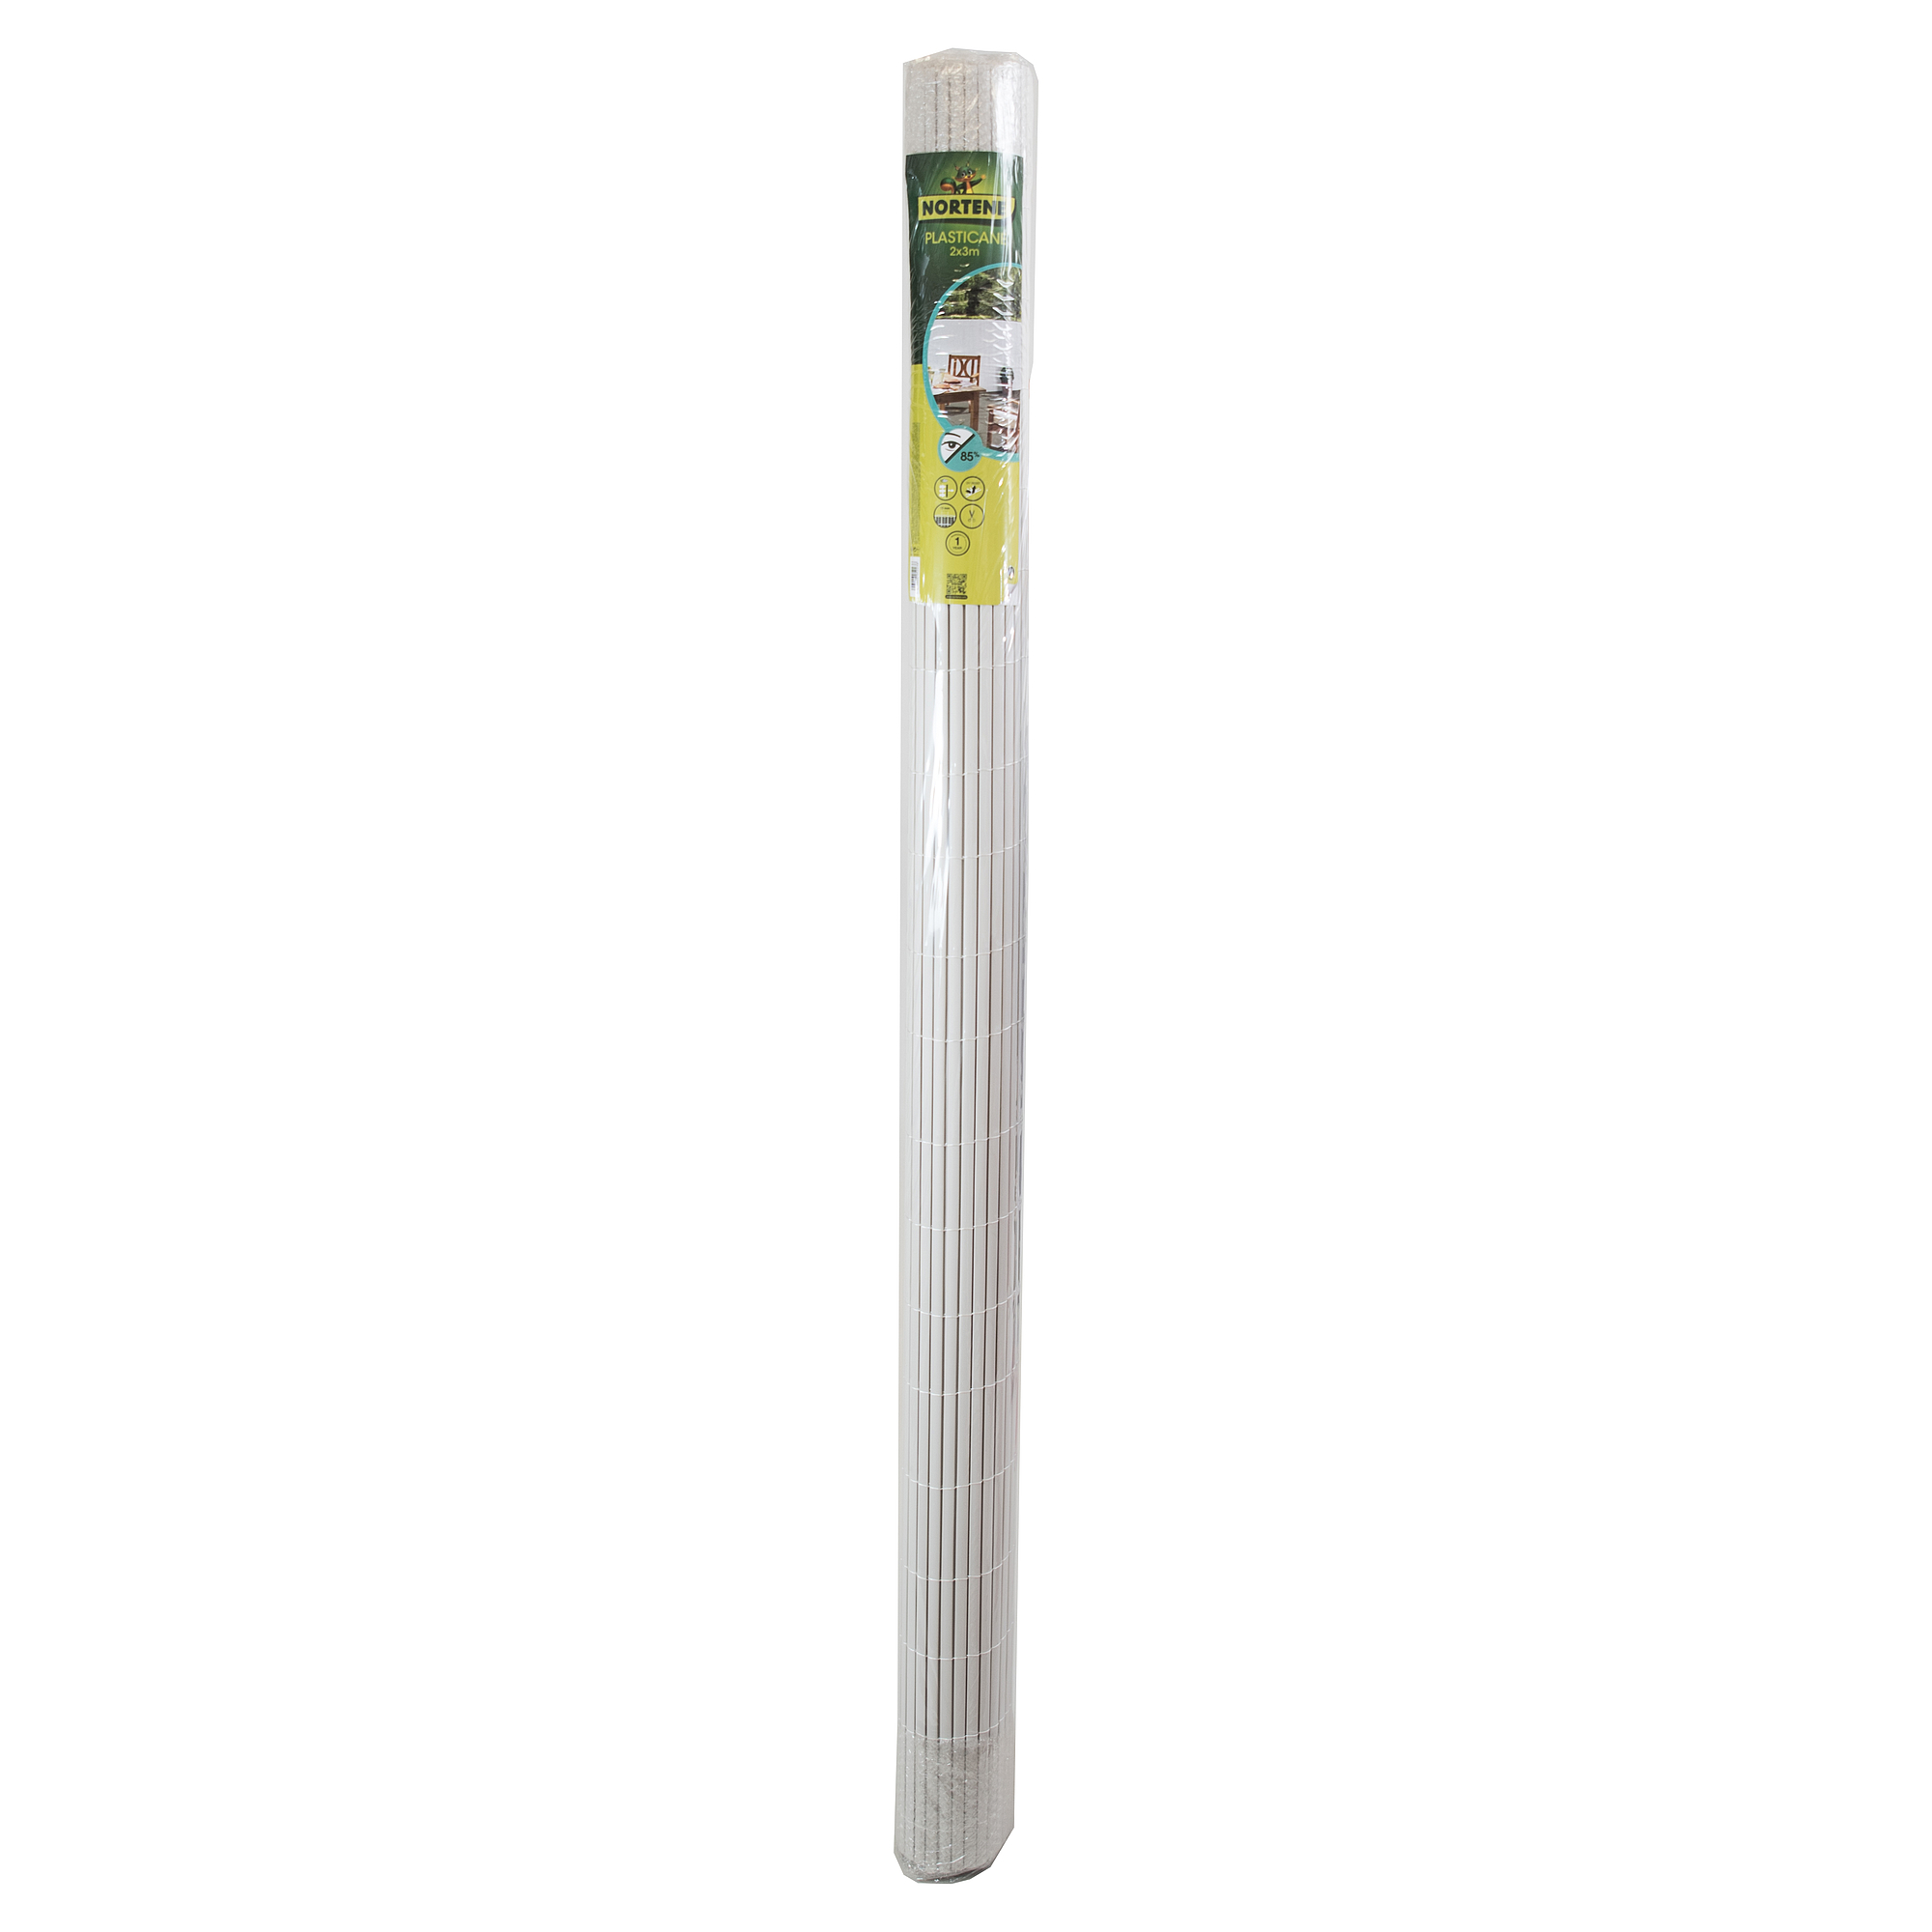 Nortene PLASTICANE OVAL ovális profilú műanyag nád, 13 mm, PVC - 1,5 x 3 m -  fehér  - 2012173